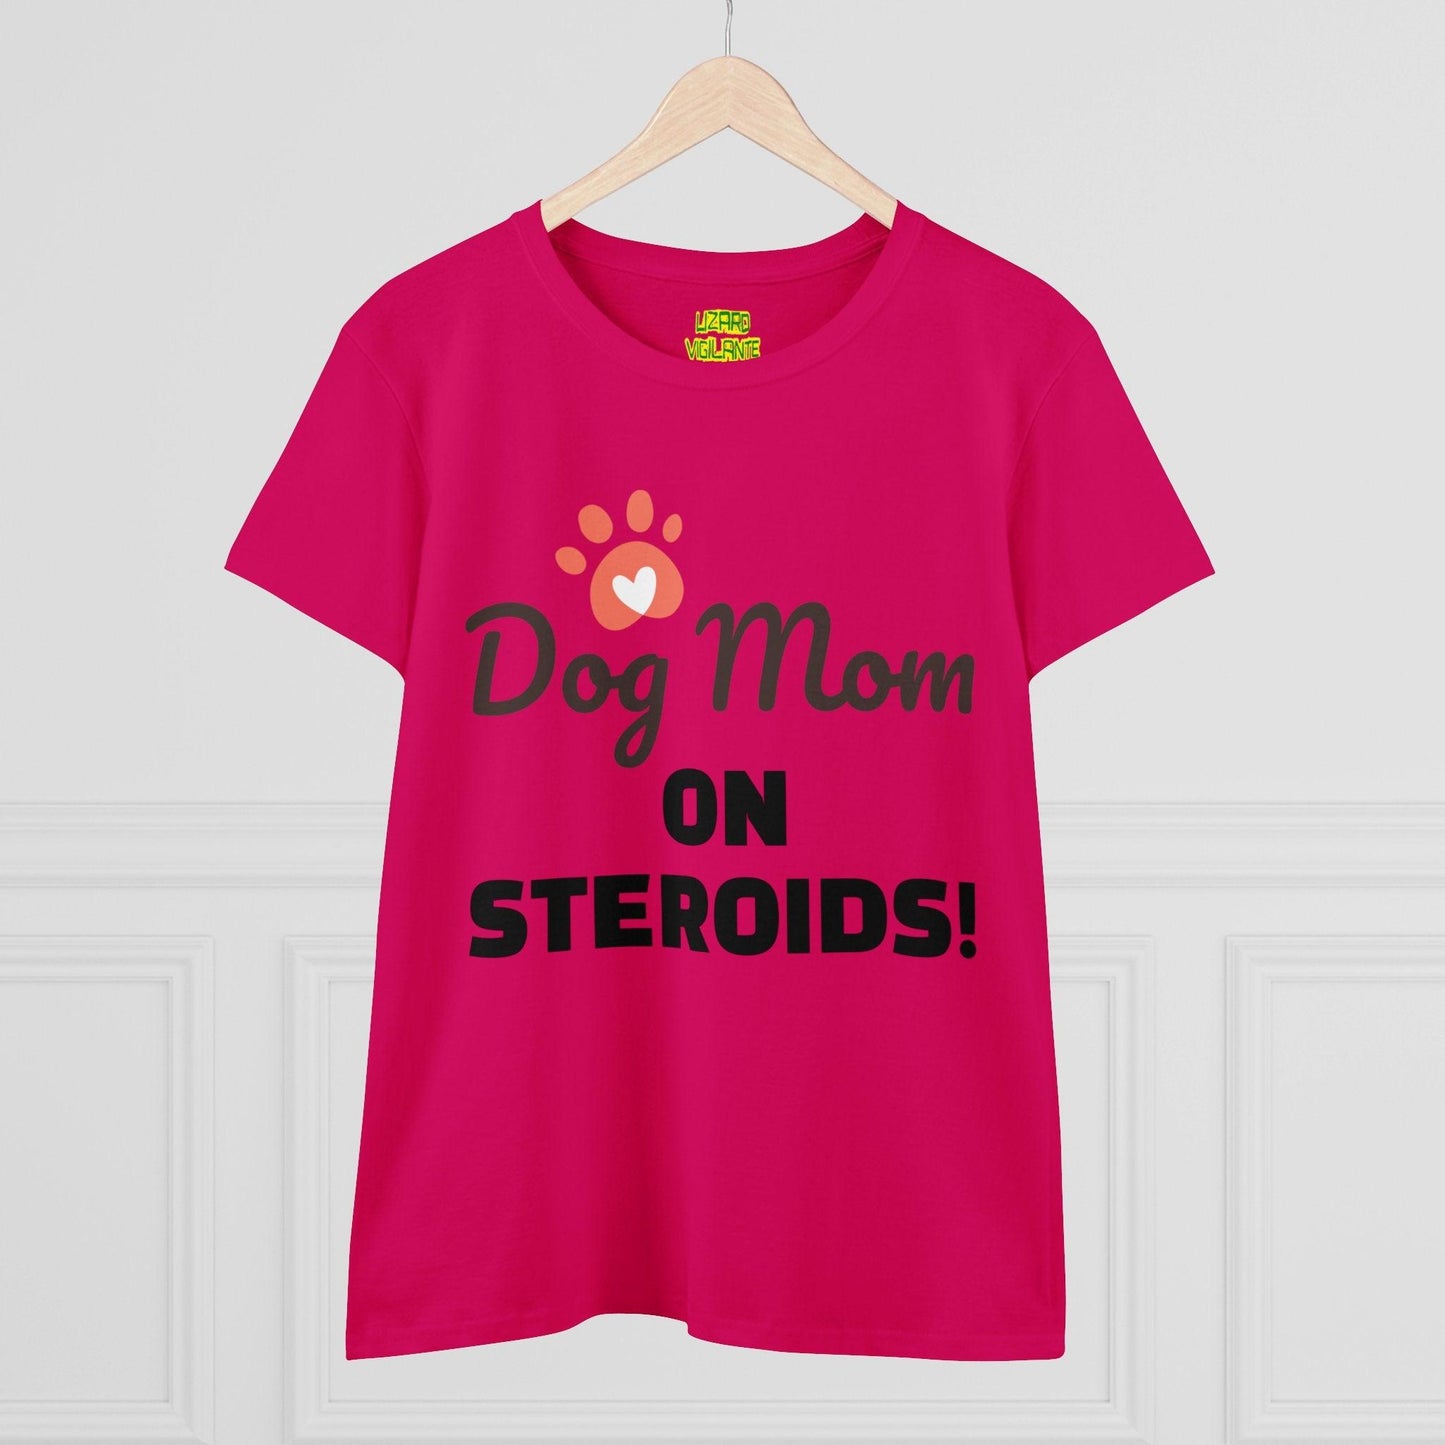 Dog Mom ON STEROIDS! Women's Midweight Cotton Tee - Lizard Vigilante